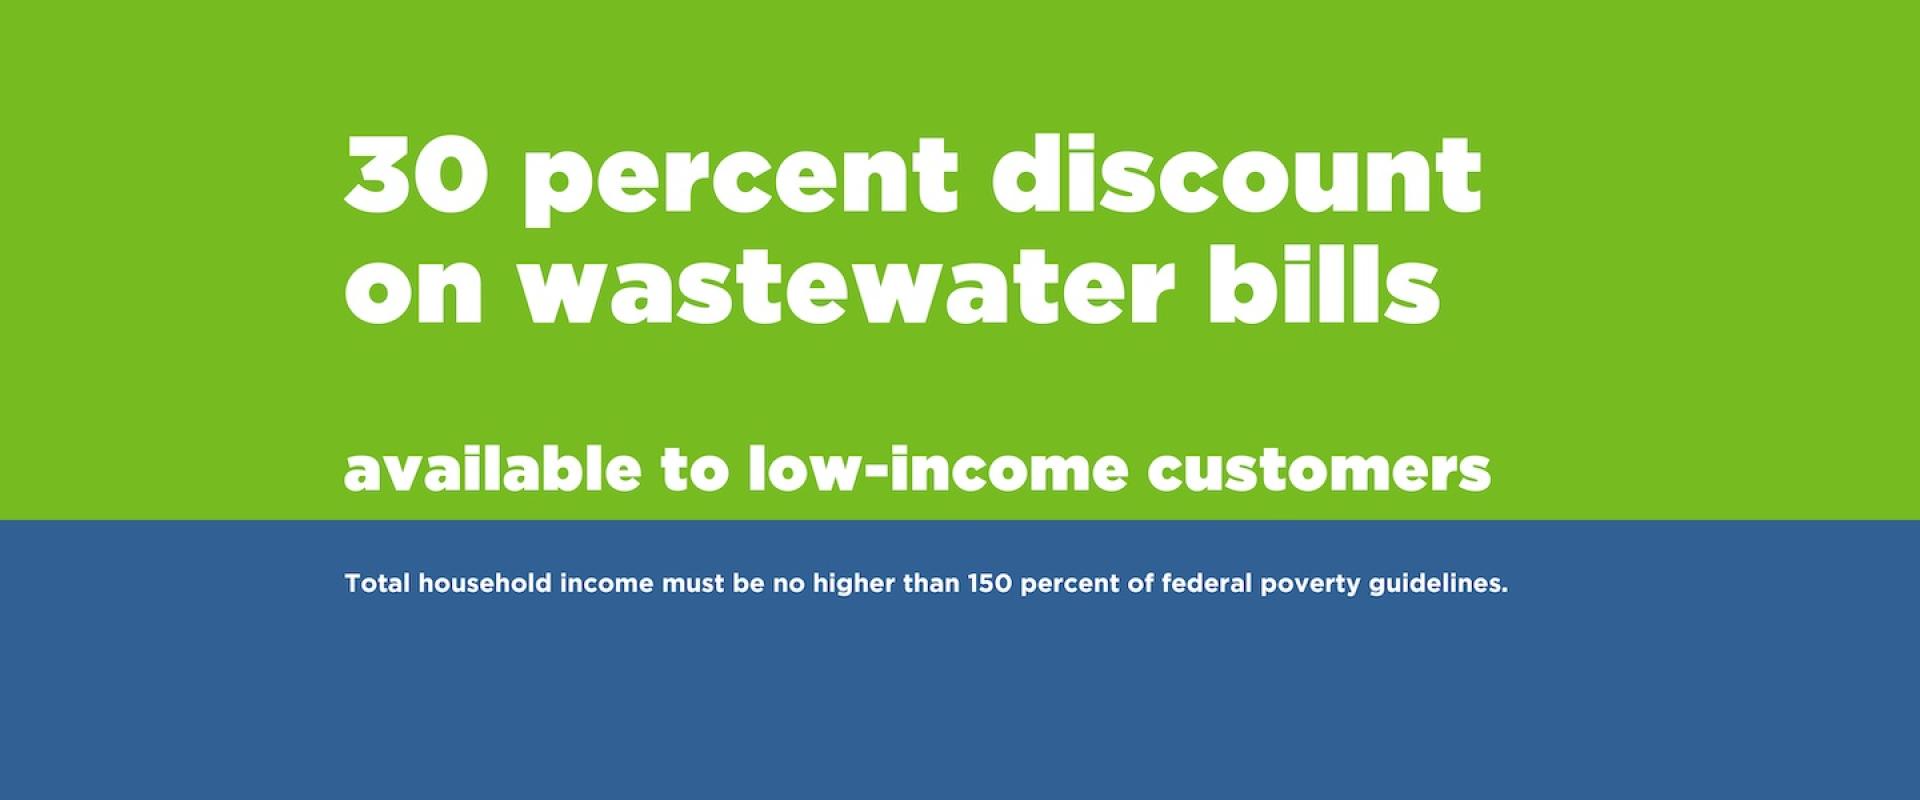 30 Percent Discount on wastewater bills